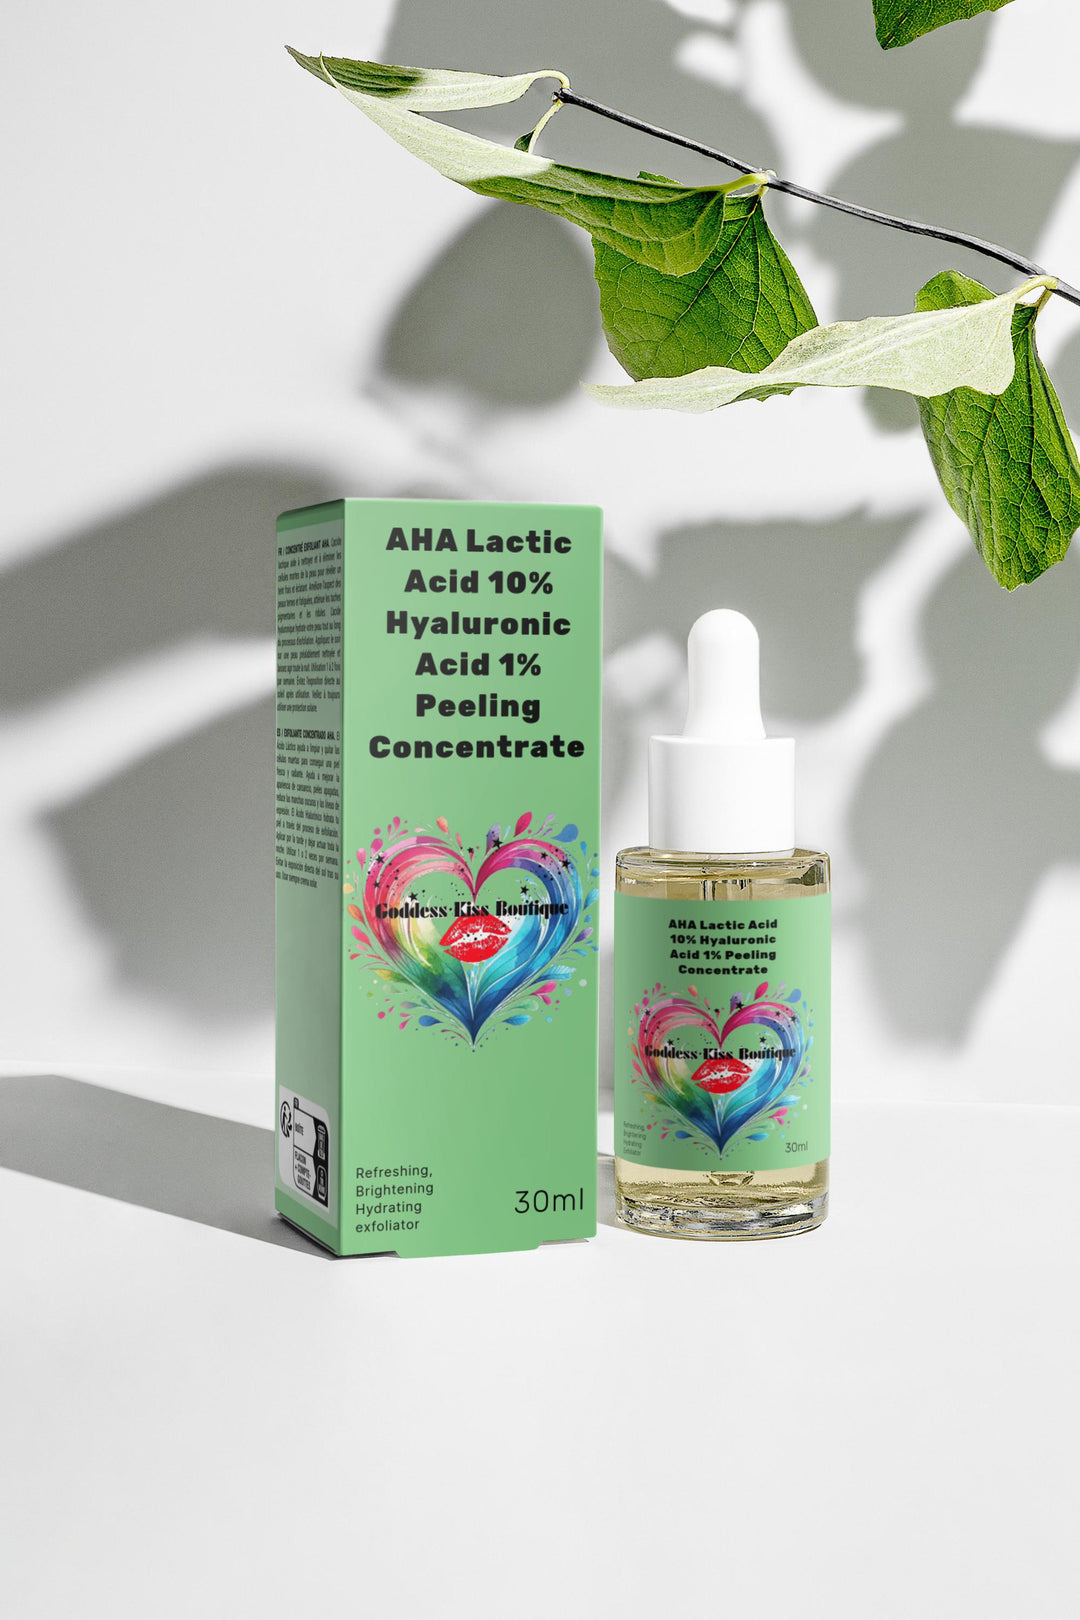 AHA Lactic Acid 10% Hyaluronic Acid 1% Peeling Concentrate